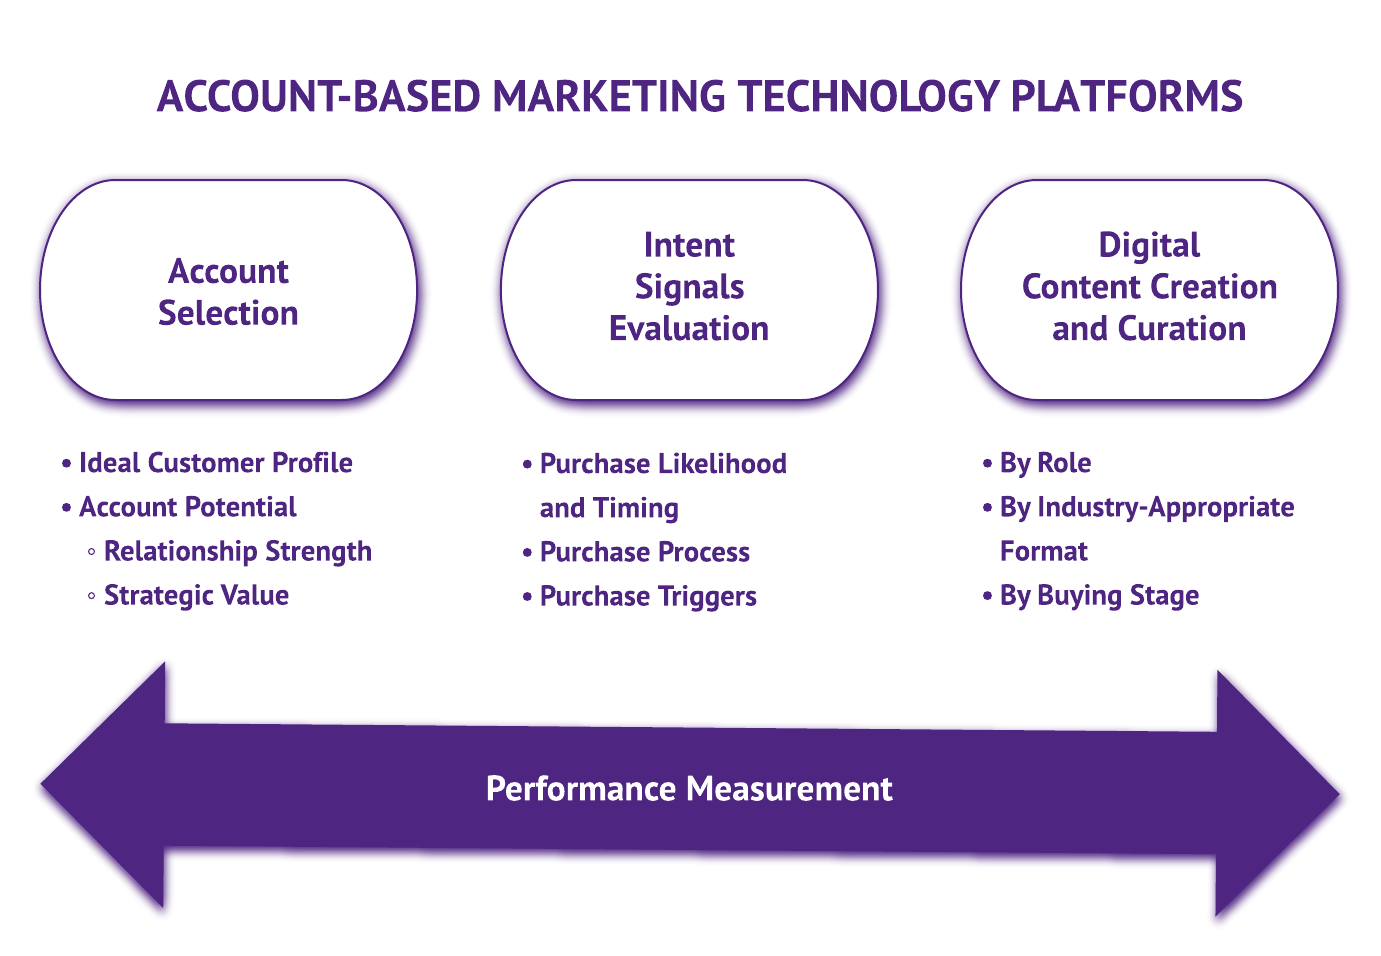 Account-Based Marketing Technology Platforms